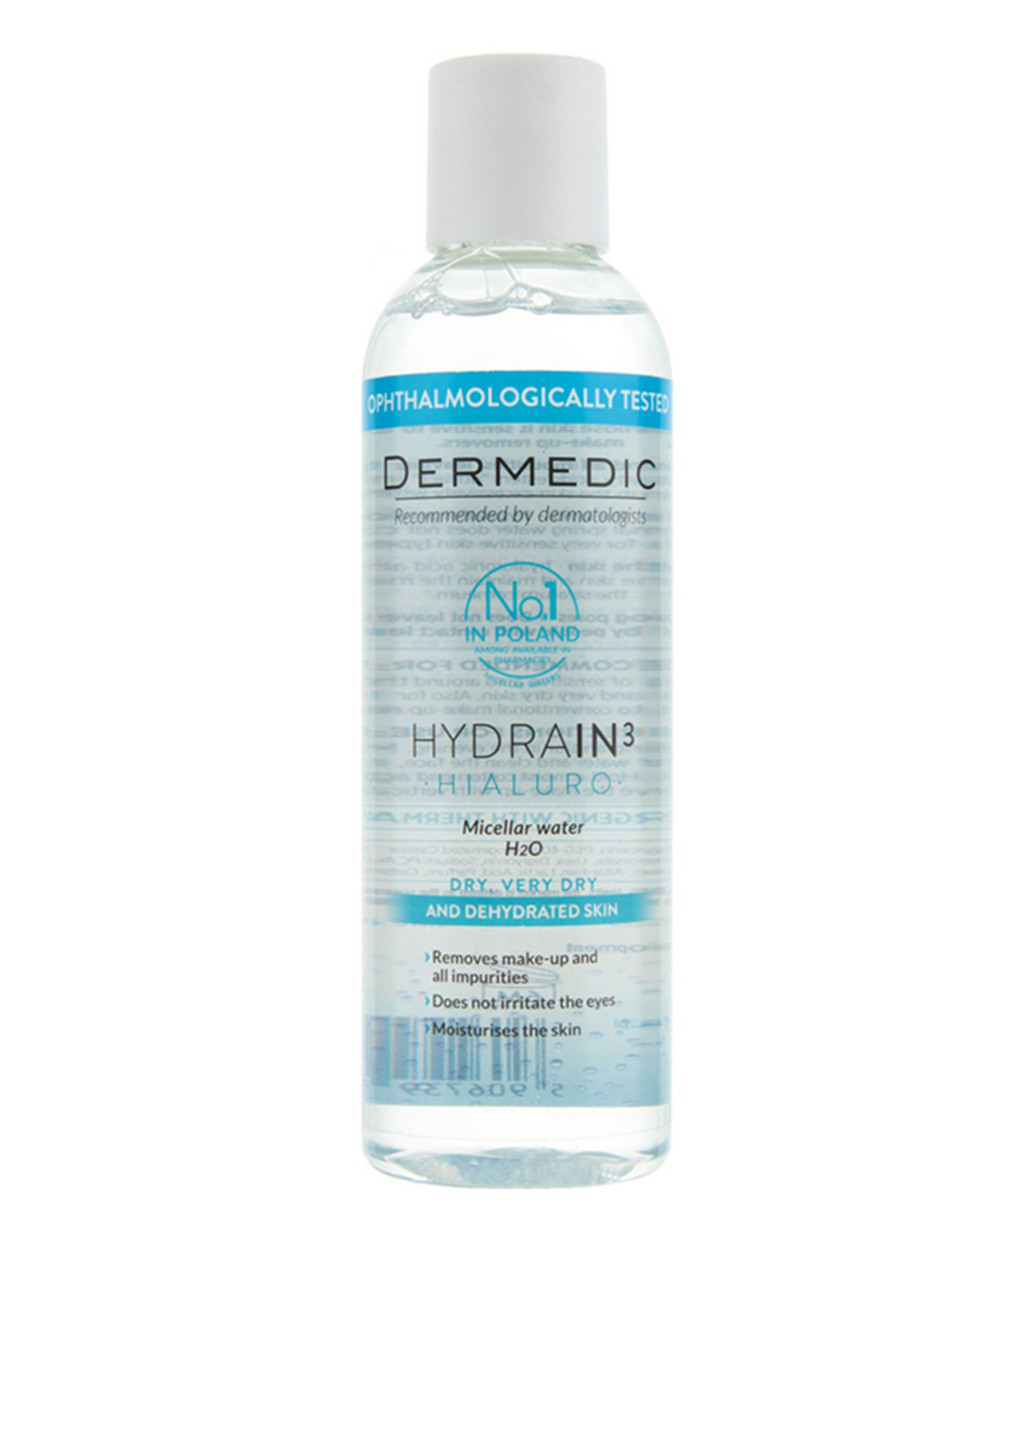 Мицеллярная жидкость Hydrain 3, 200 мл Dermedic (80603892)